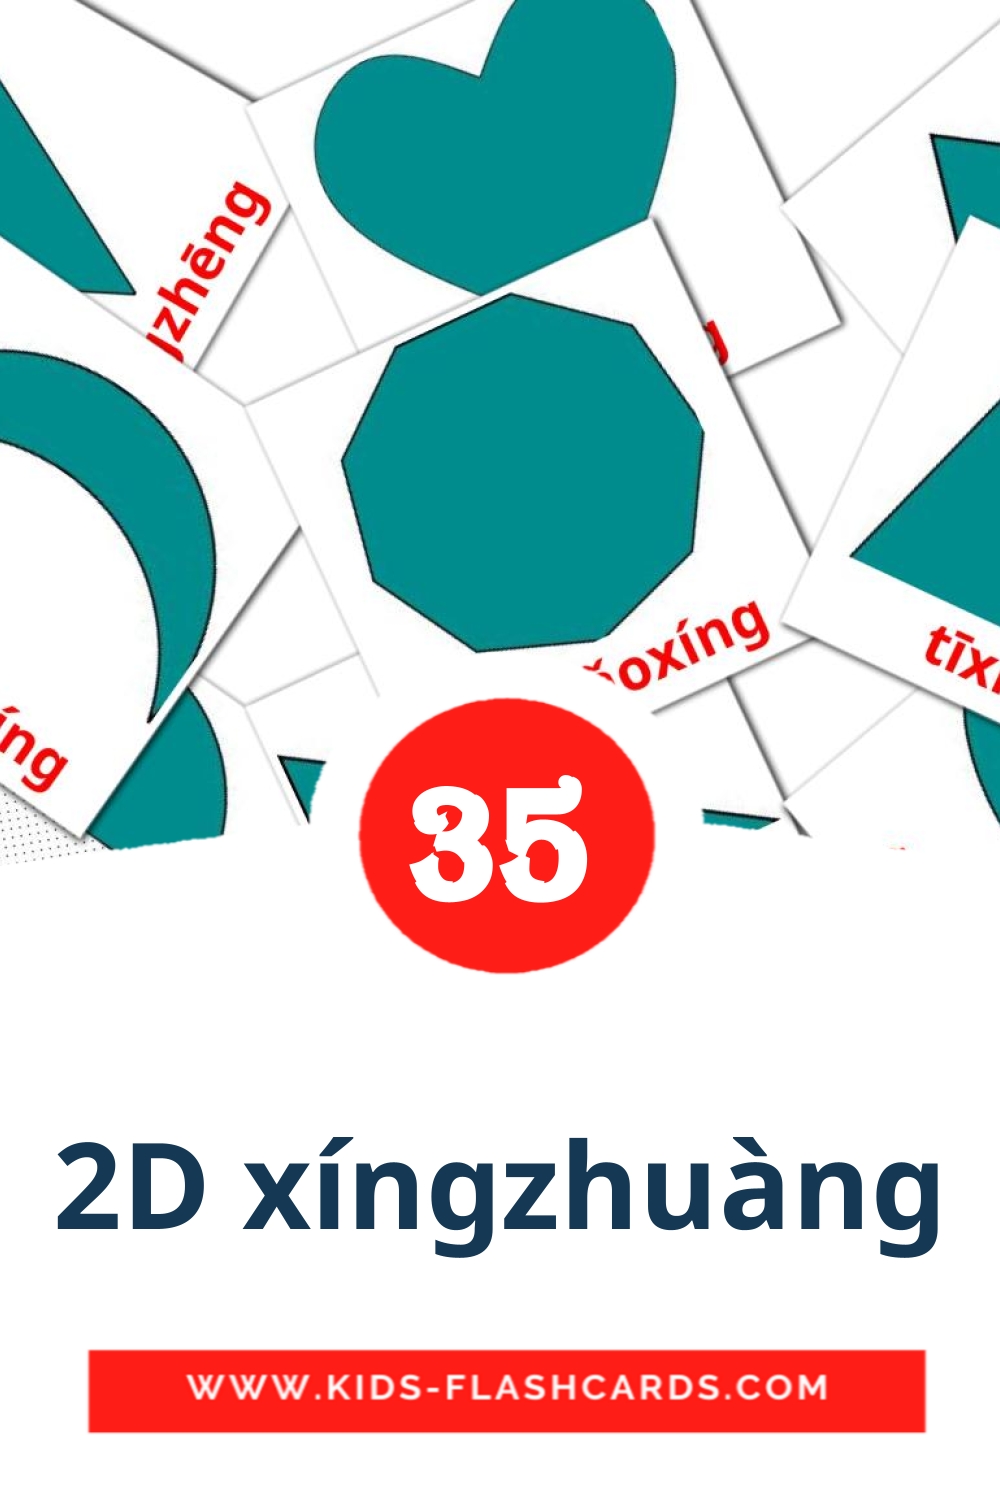 35 carte illustrate di 2D xíngzhuàng per la scuola materna in pinyin